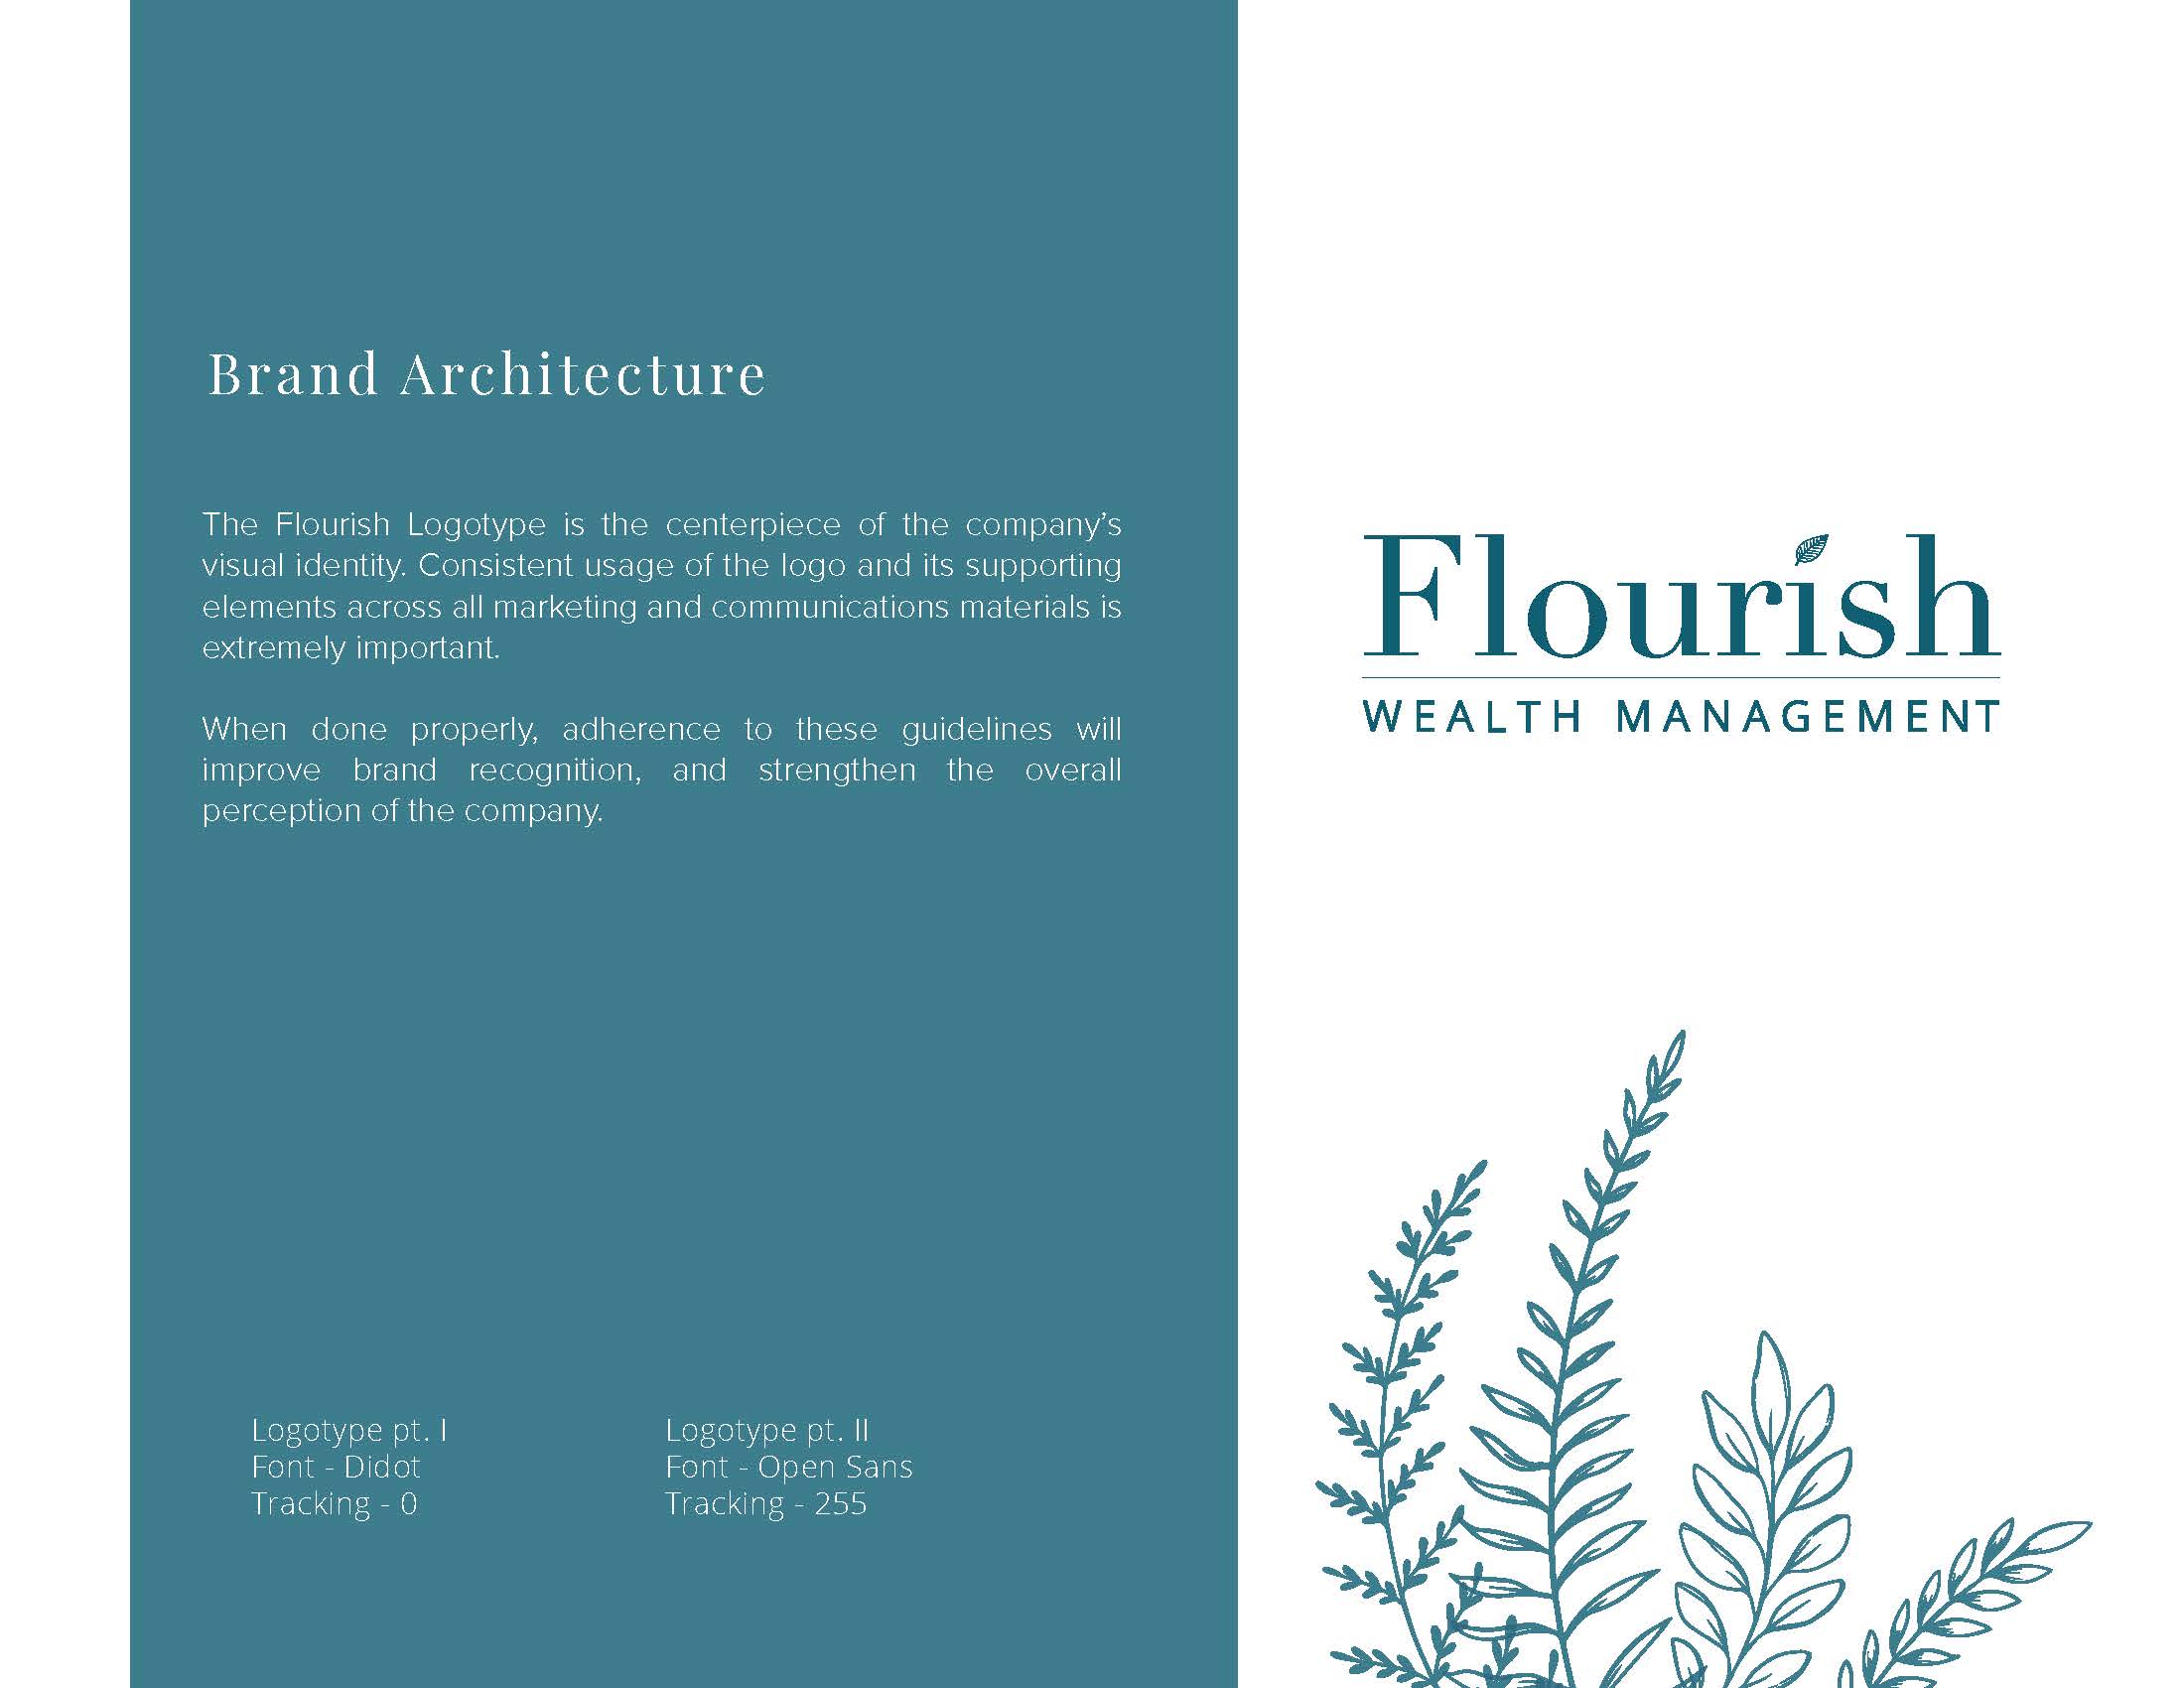 flourish brand guide 2019 page 03